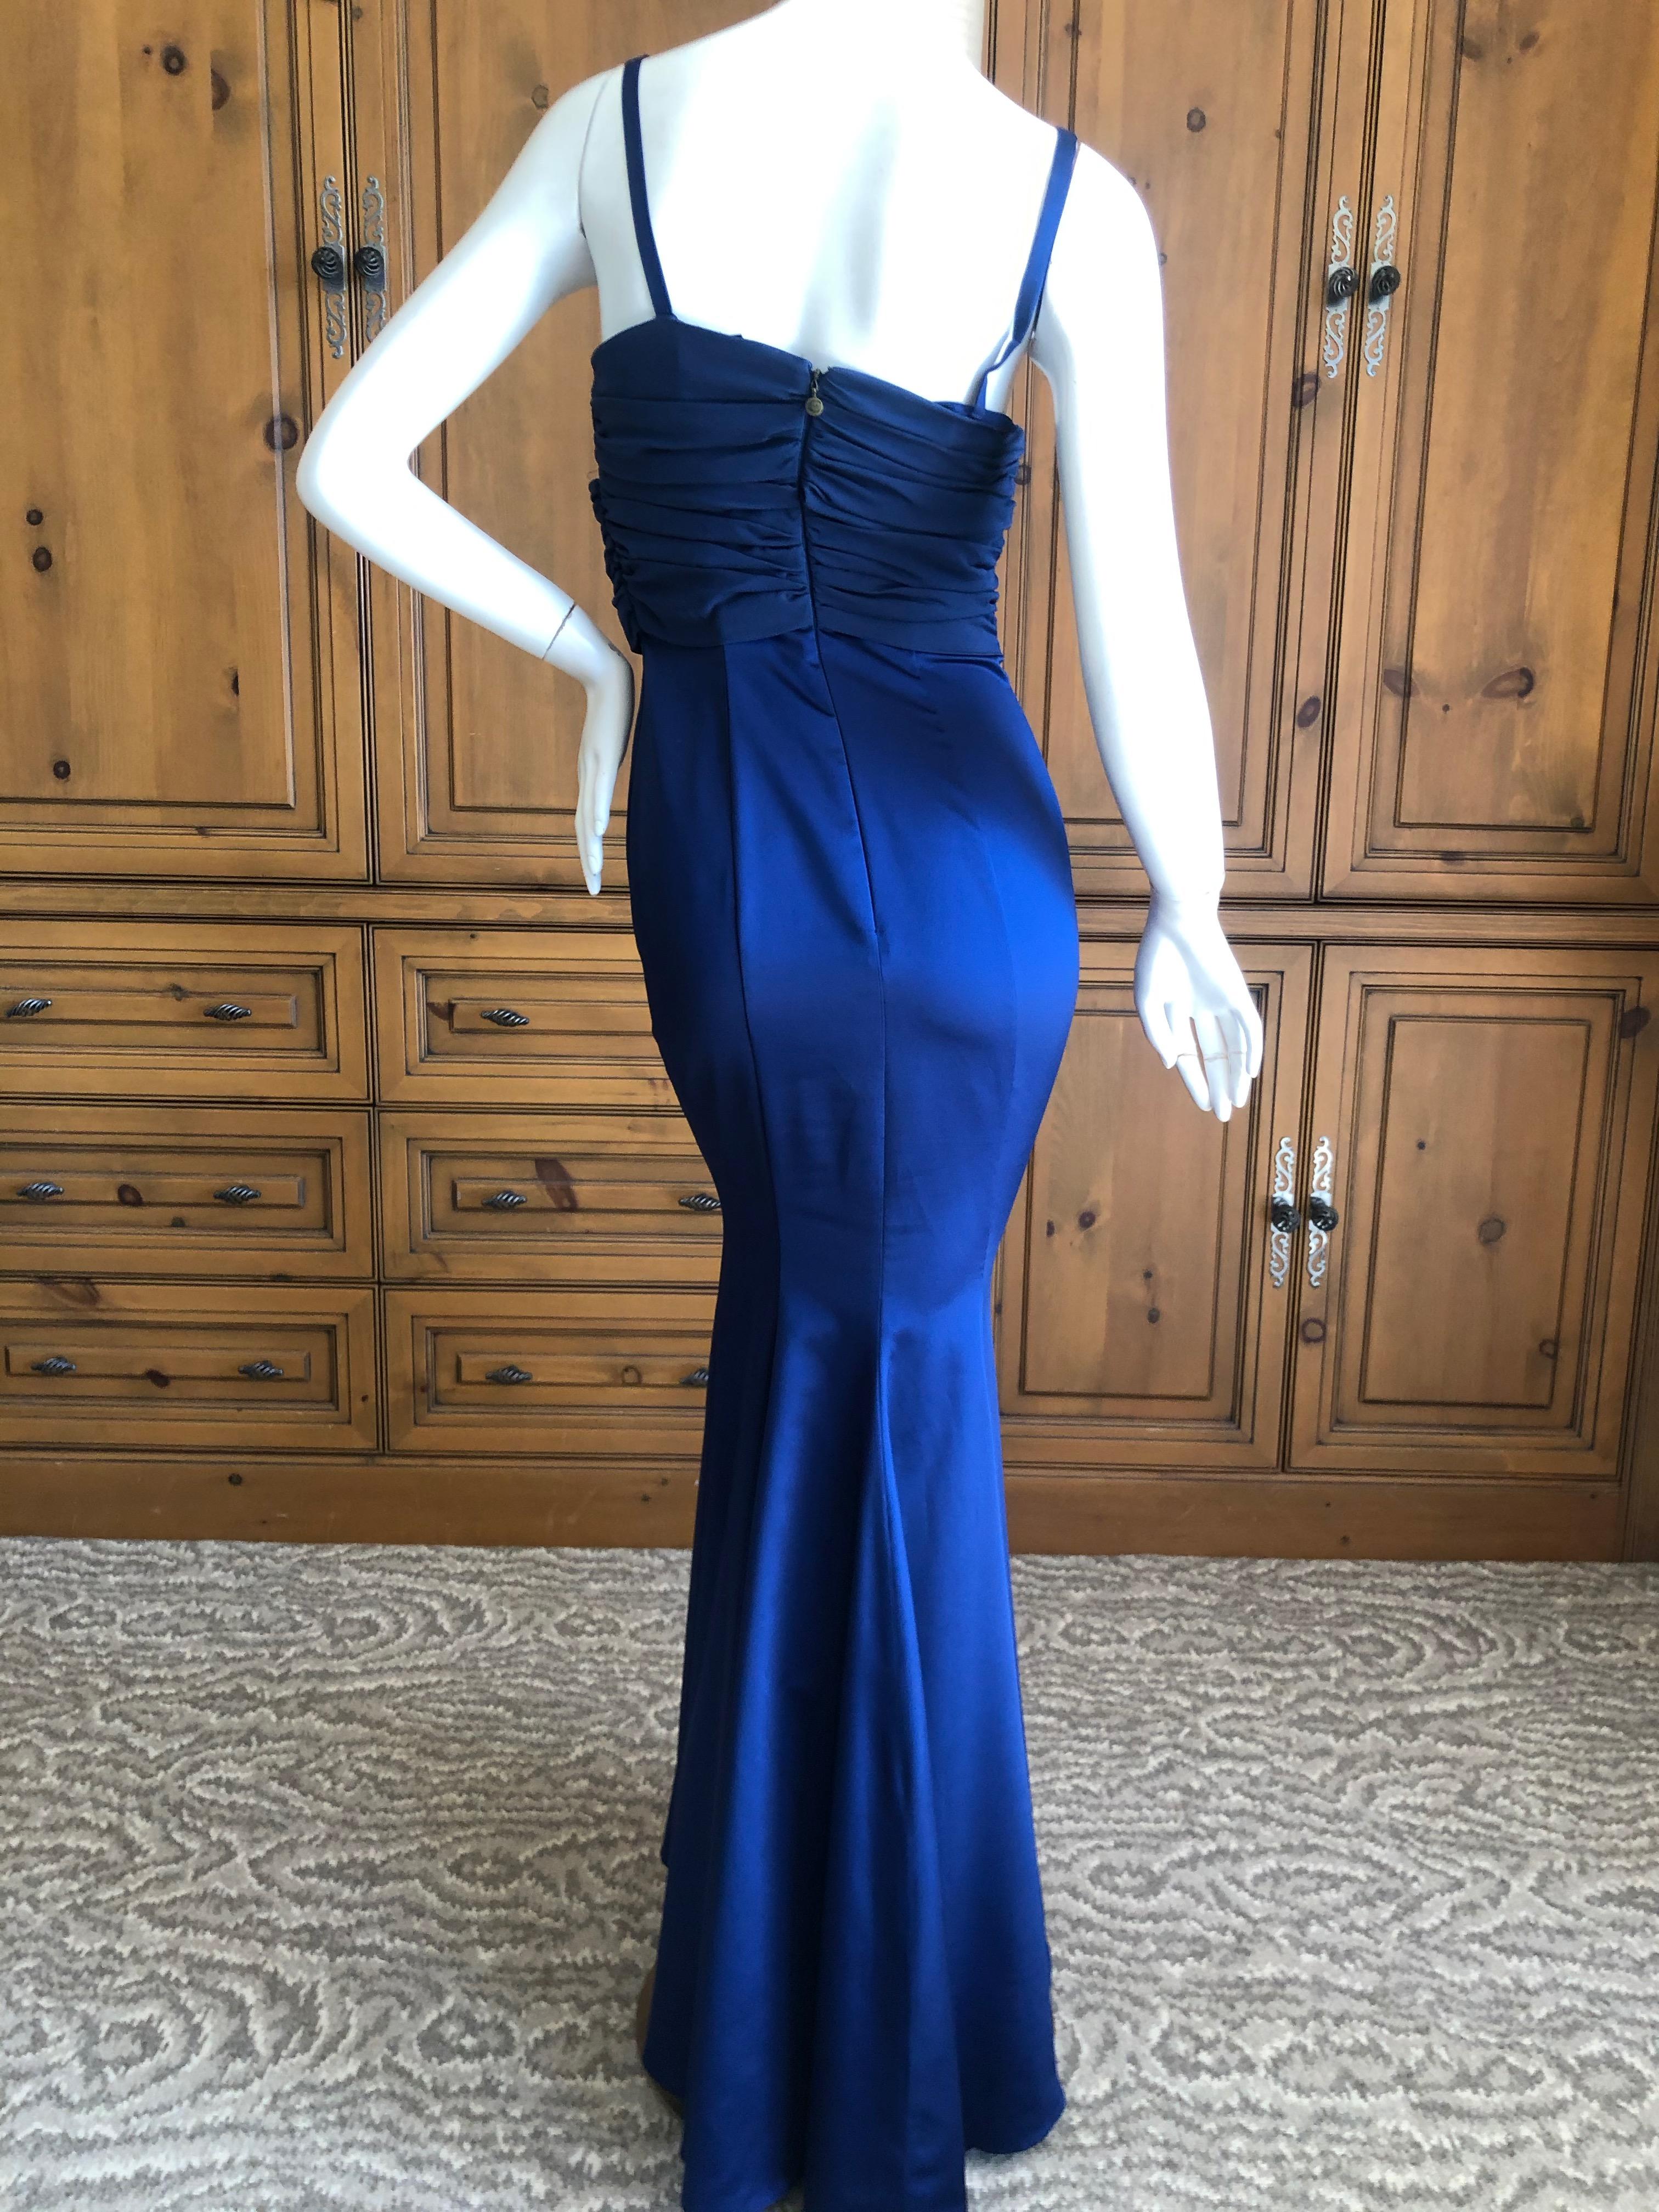  Roberto Cavalli for Just Cavalli Elegant Midnight Blue Evening Dress
Size 40
Bust 34